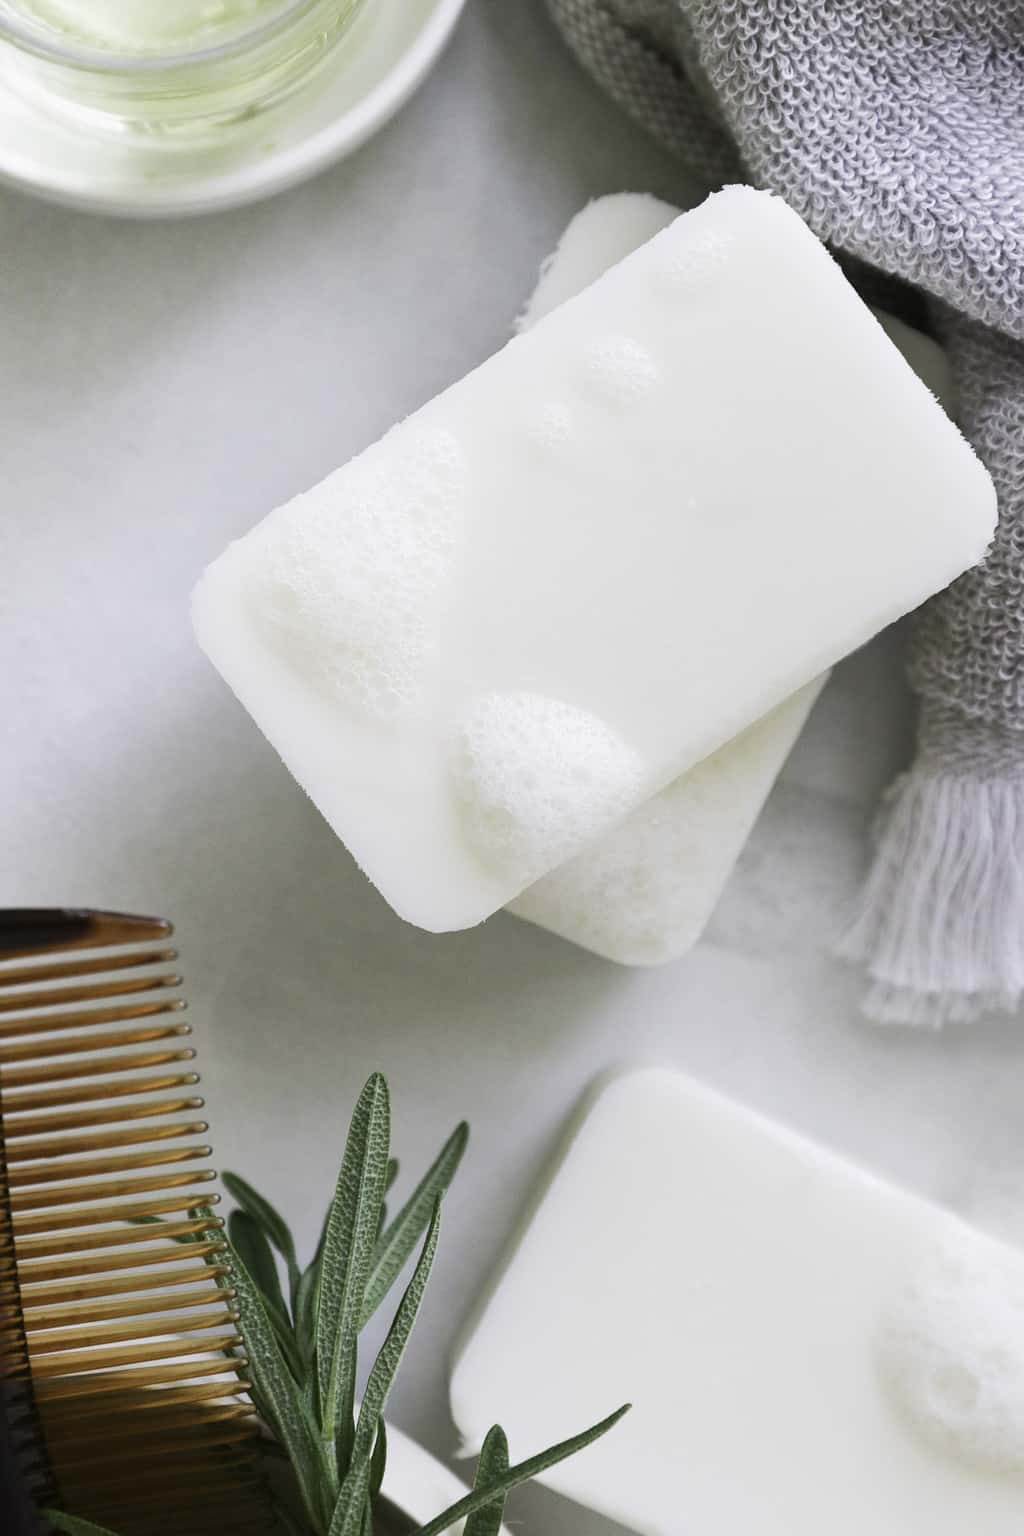 How to make melt and pour soap shampoo bars